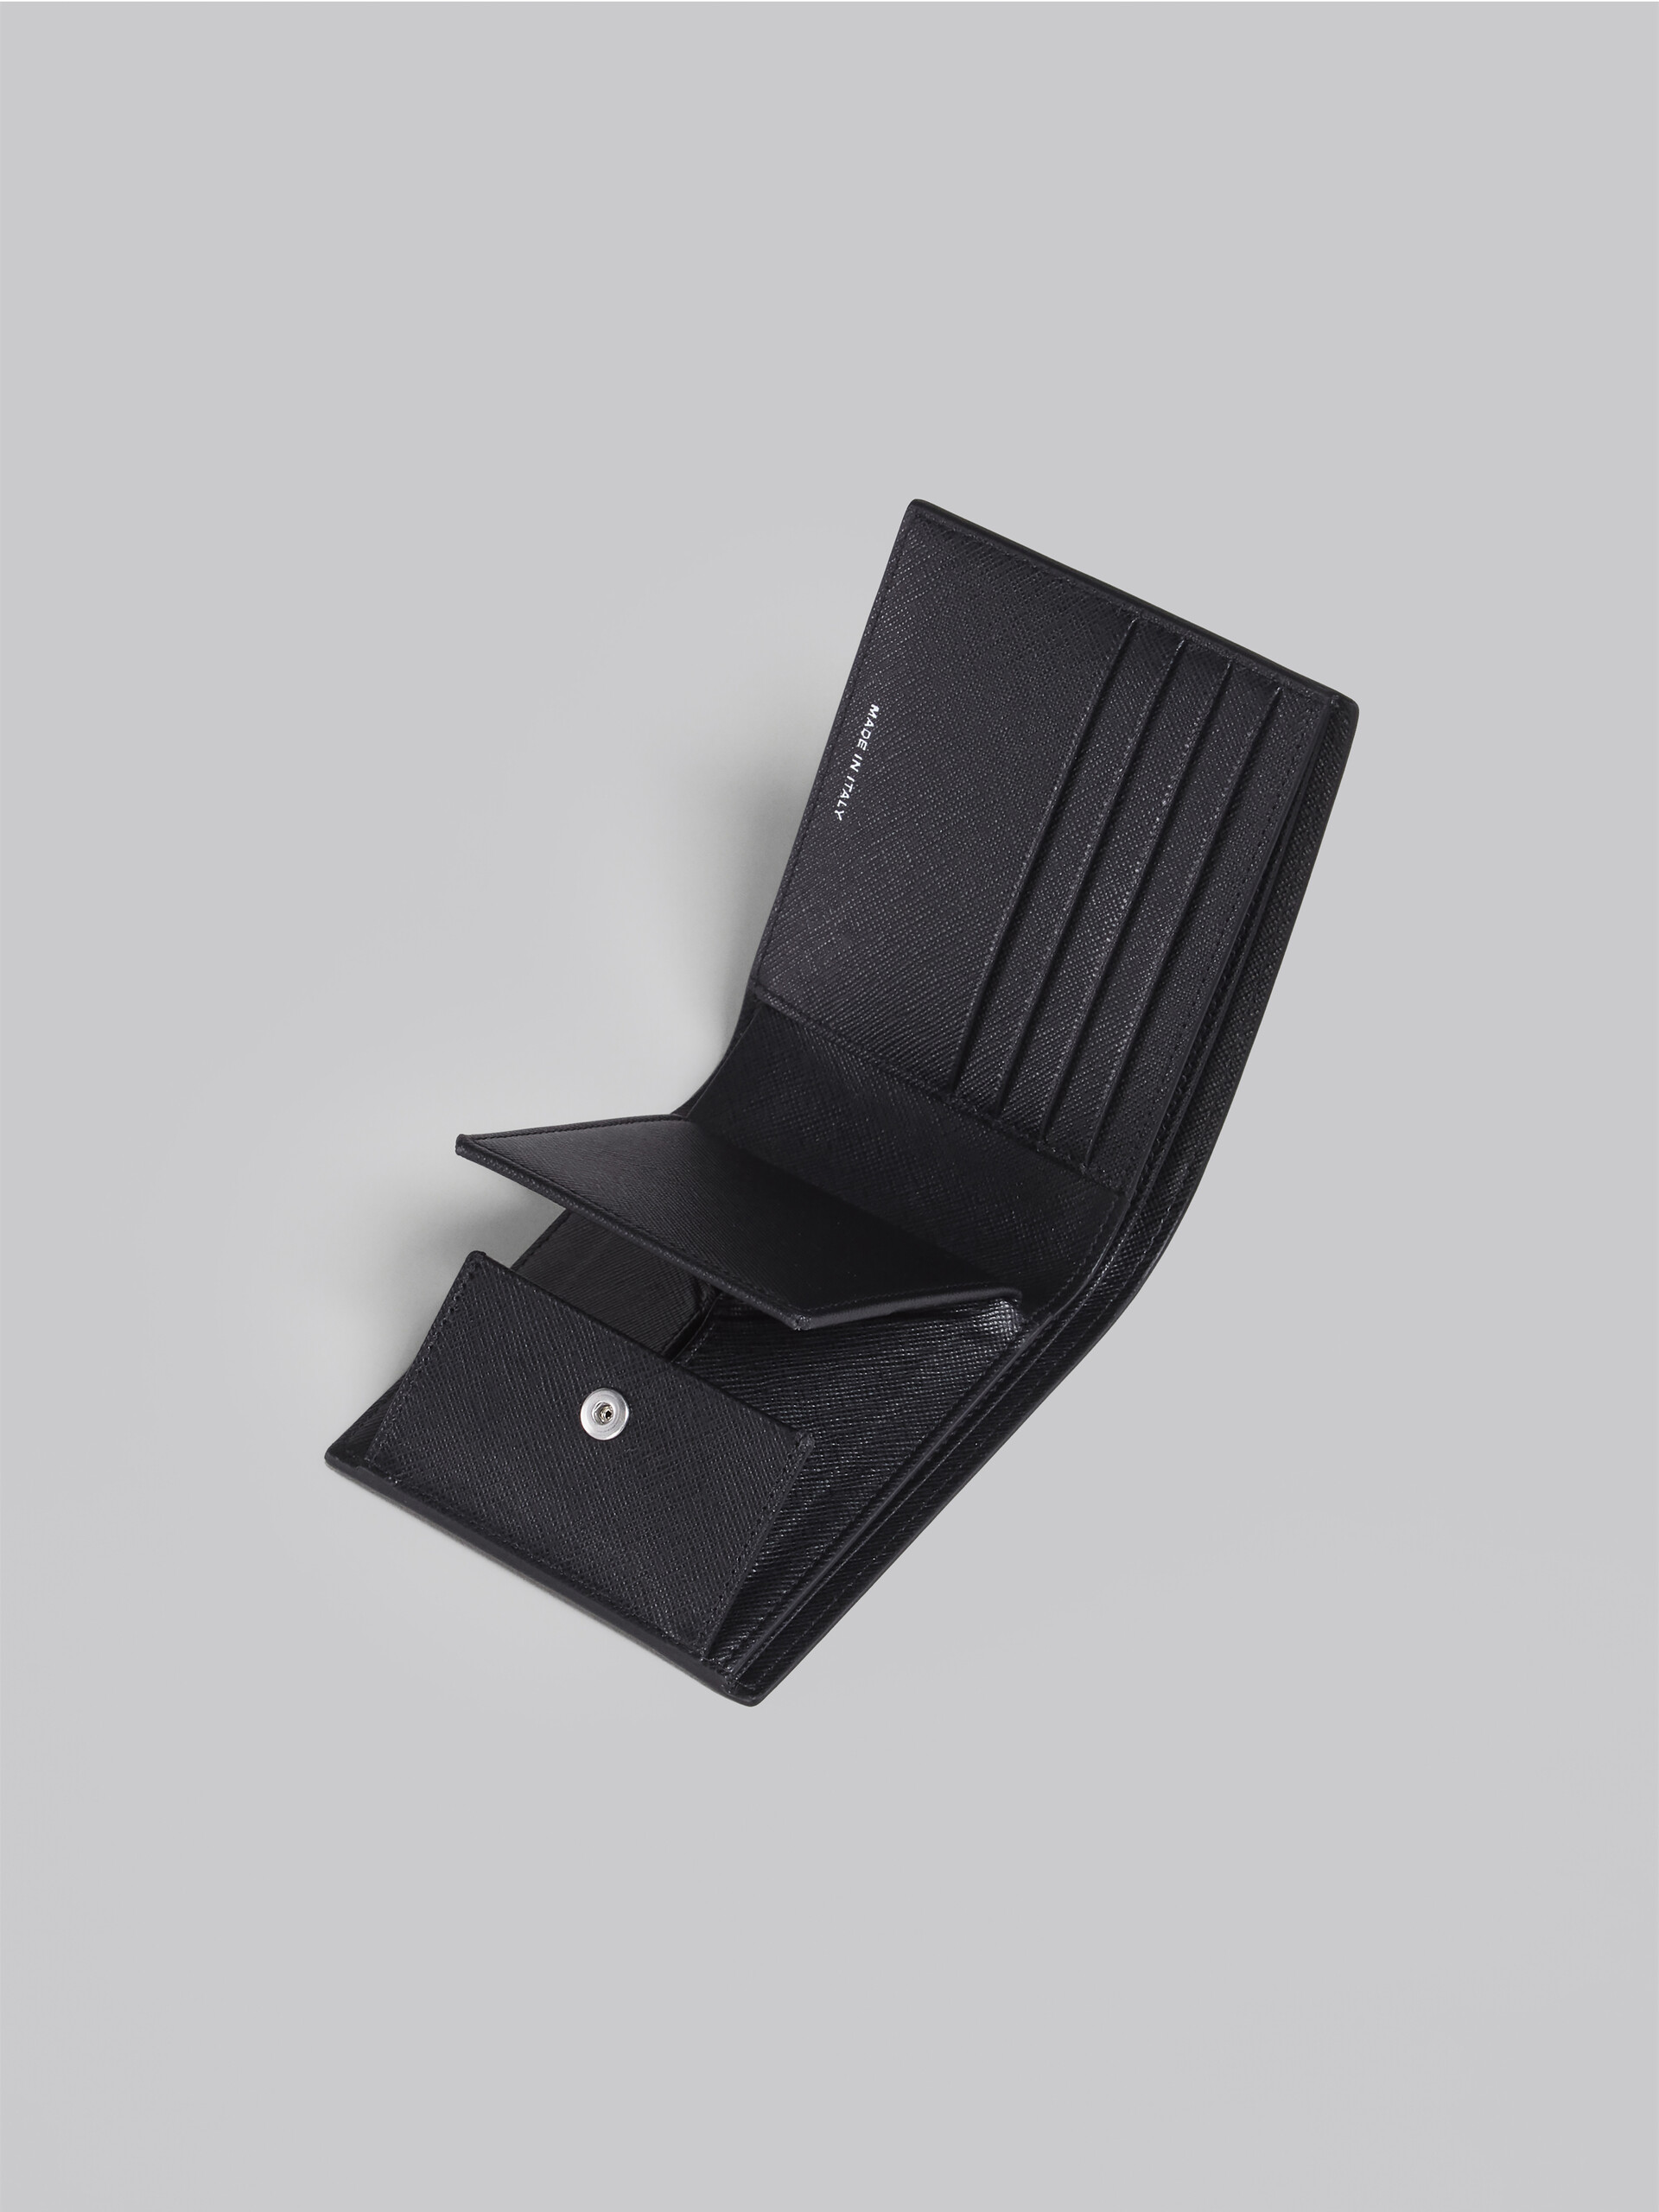 Black saffiano leather bi-fold wallet - Wallets - Image 4